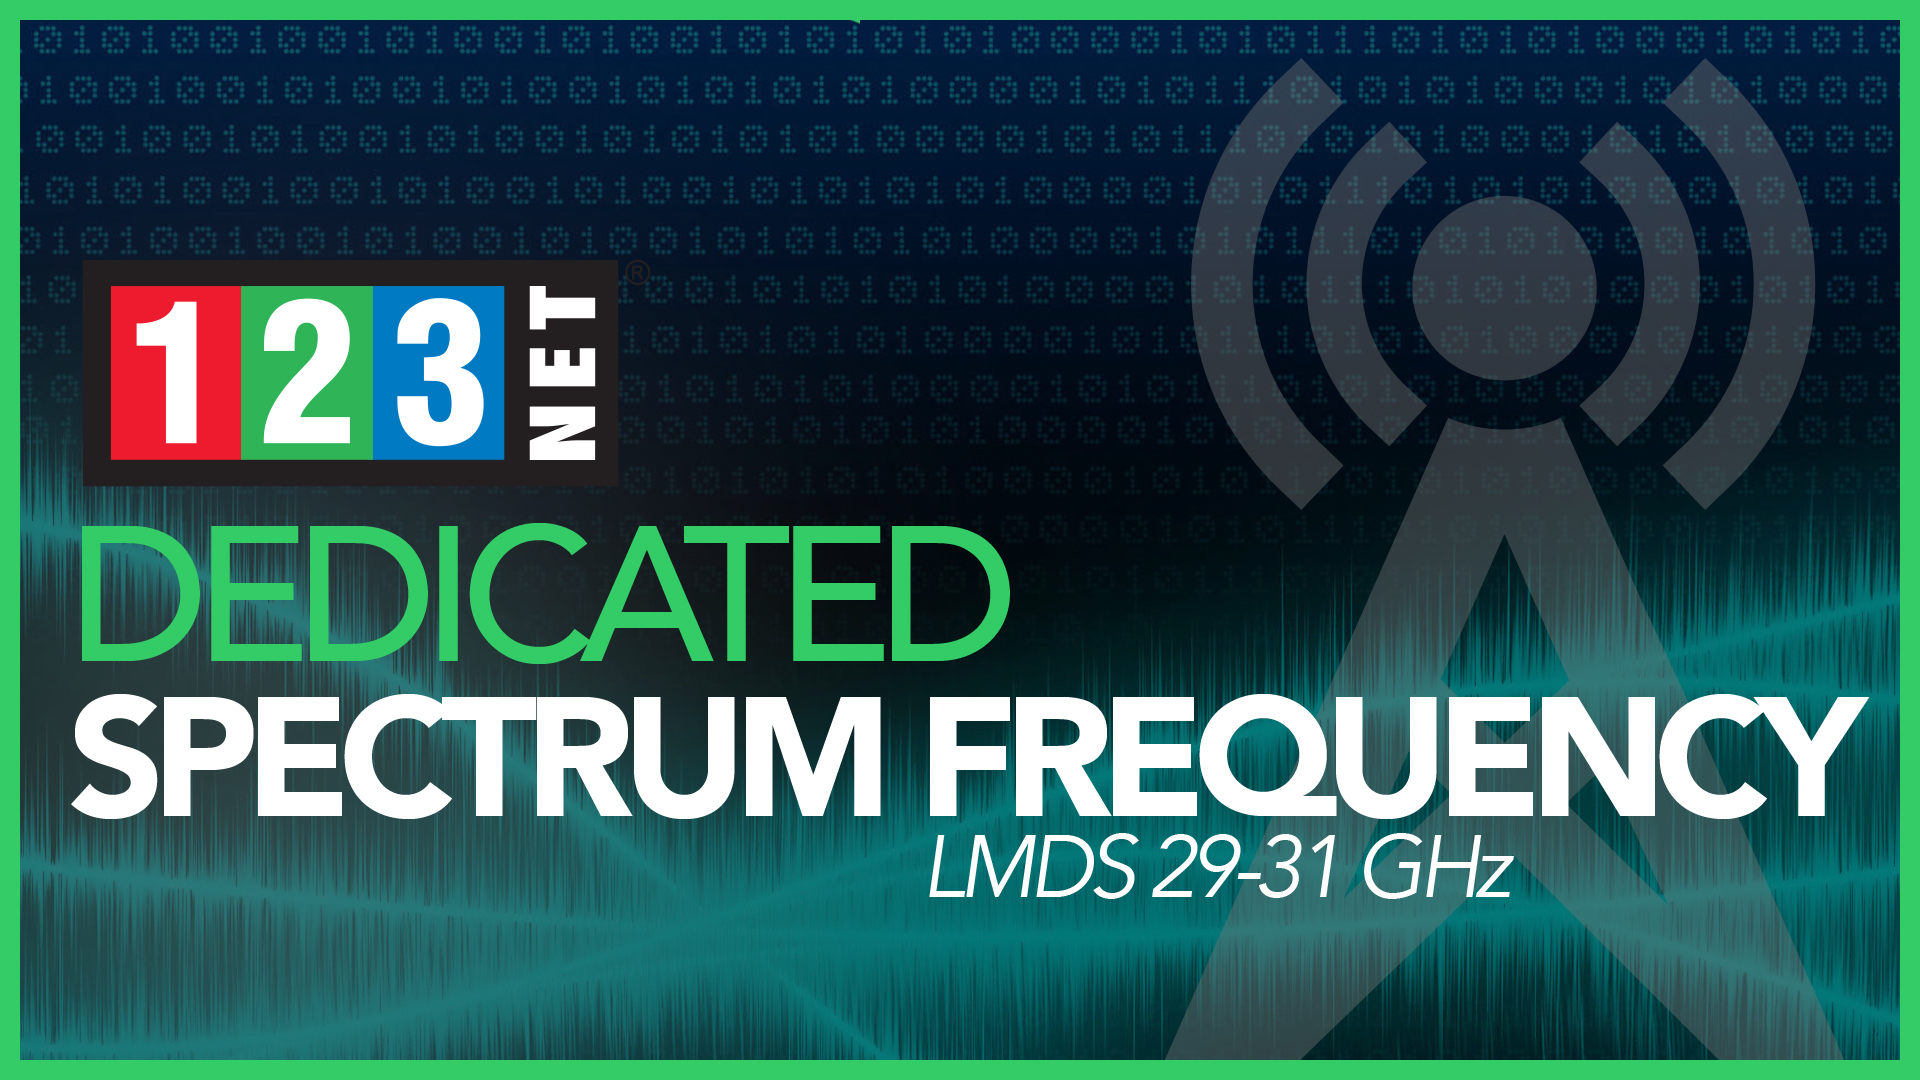 123NET Purchases GeoLinks’ LMDS Spectrum to Strengthen Wireless Network￼